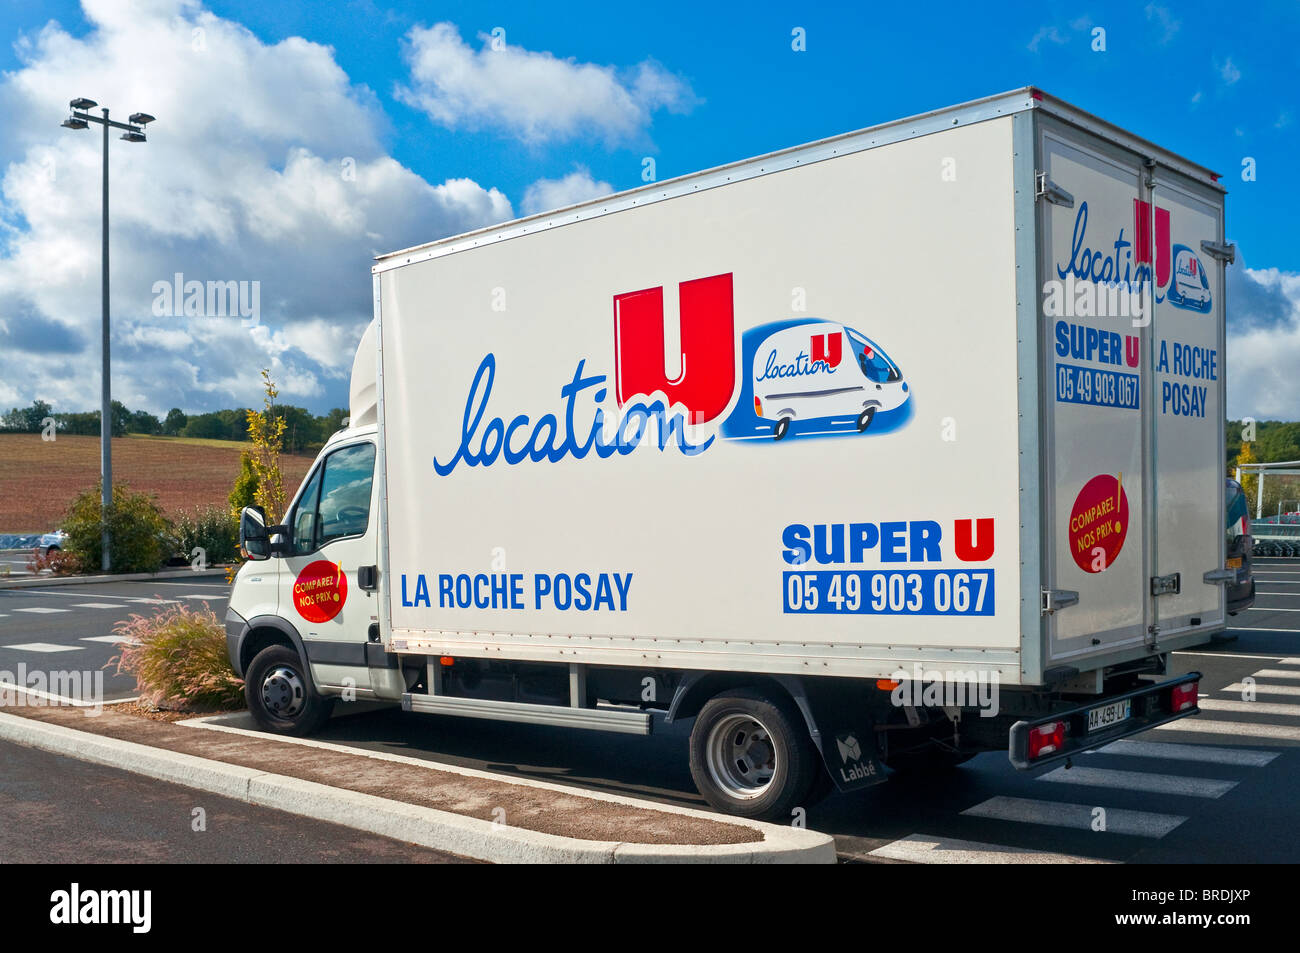 Commercial transit van for hire in supermarket car-park - France. Stock Photo